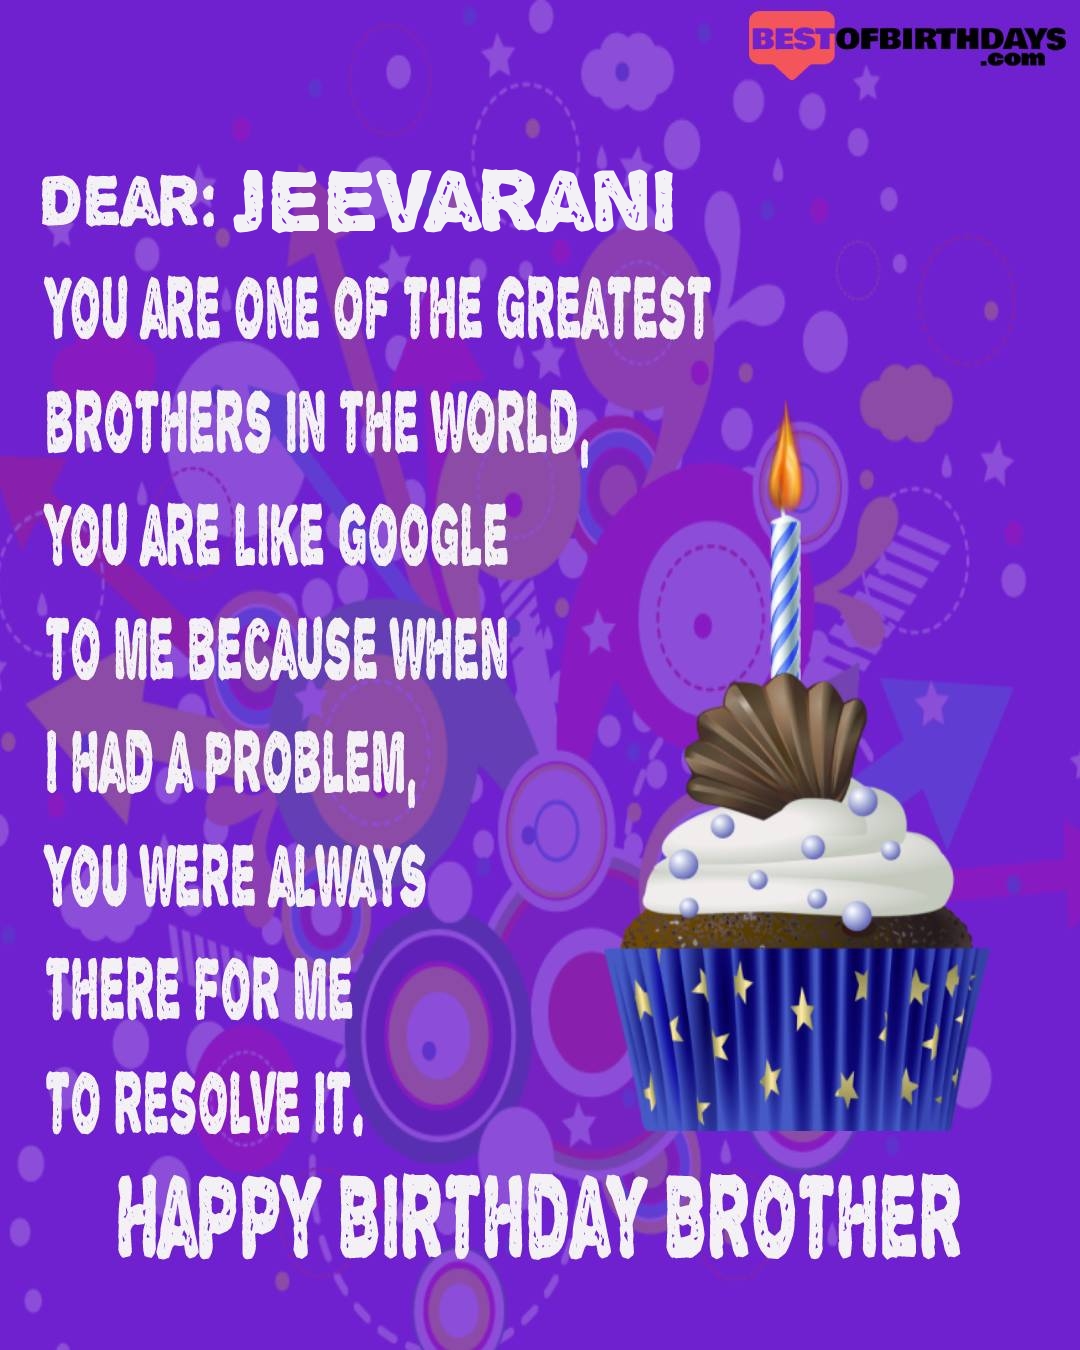 Happy birthday jeevarani bhai brother bro